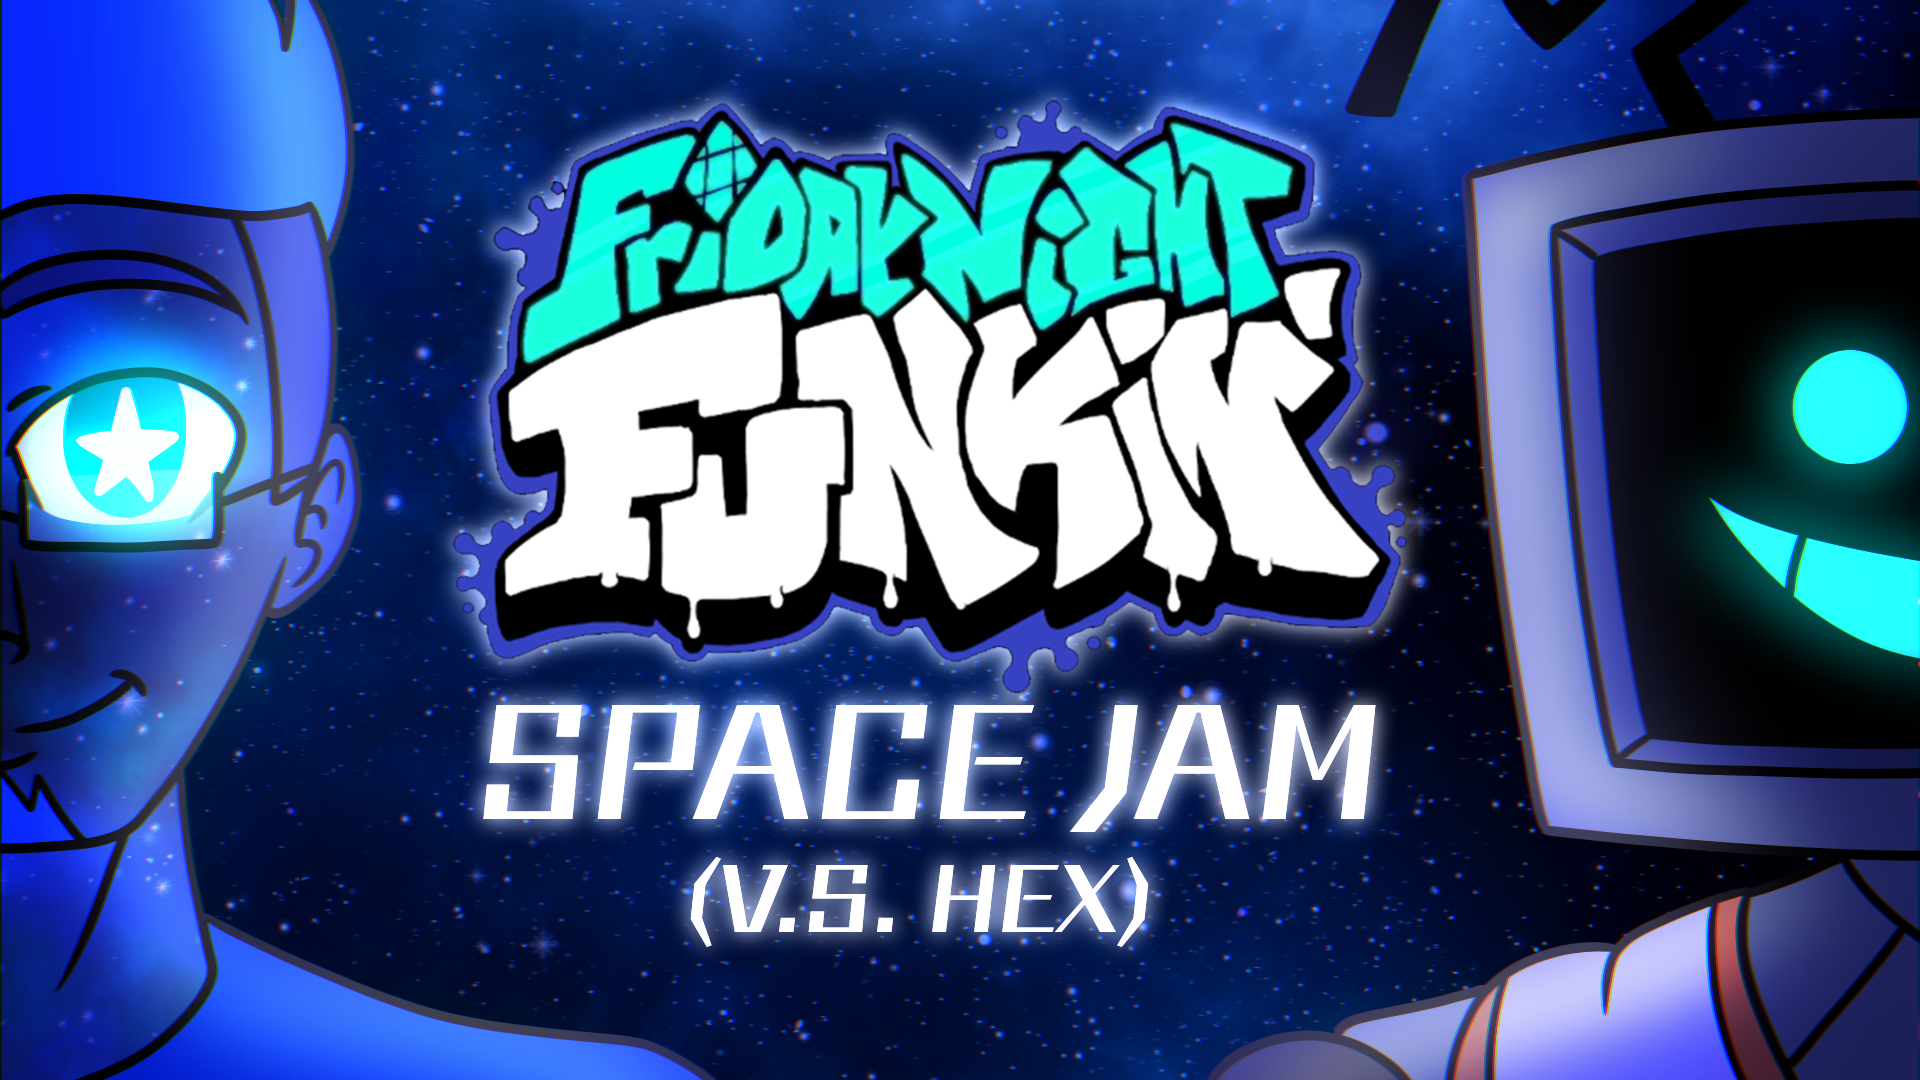 VS Hex Mod - Friday Night Funkin - Download